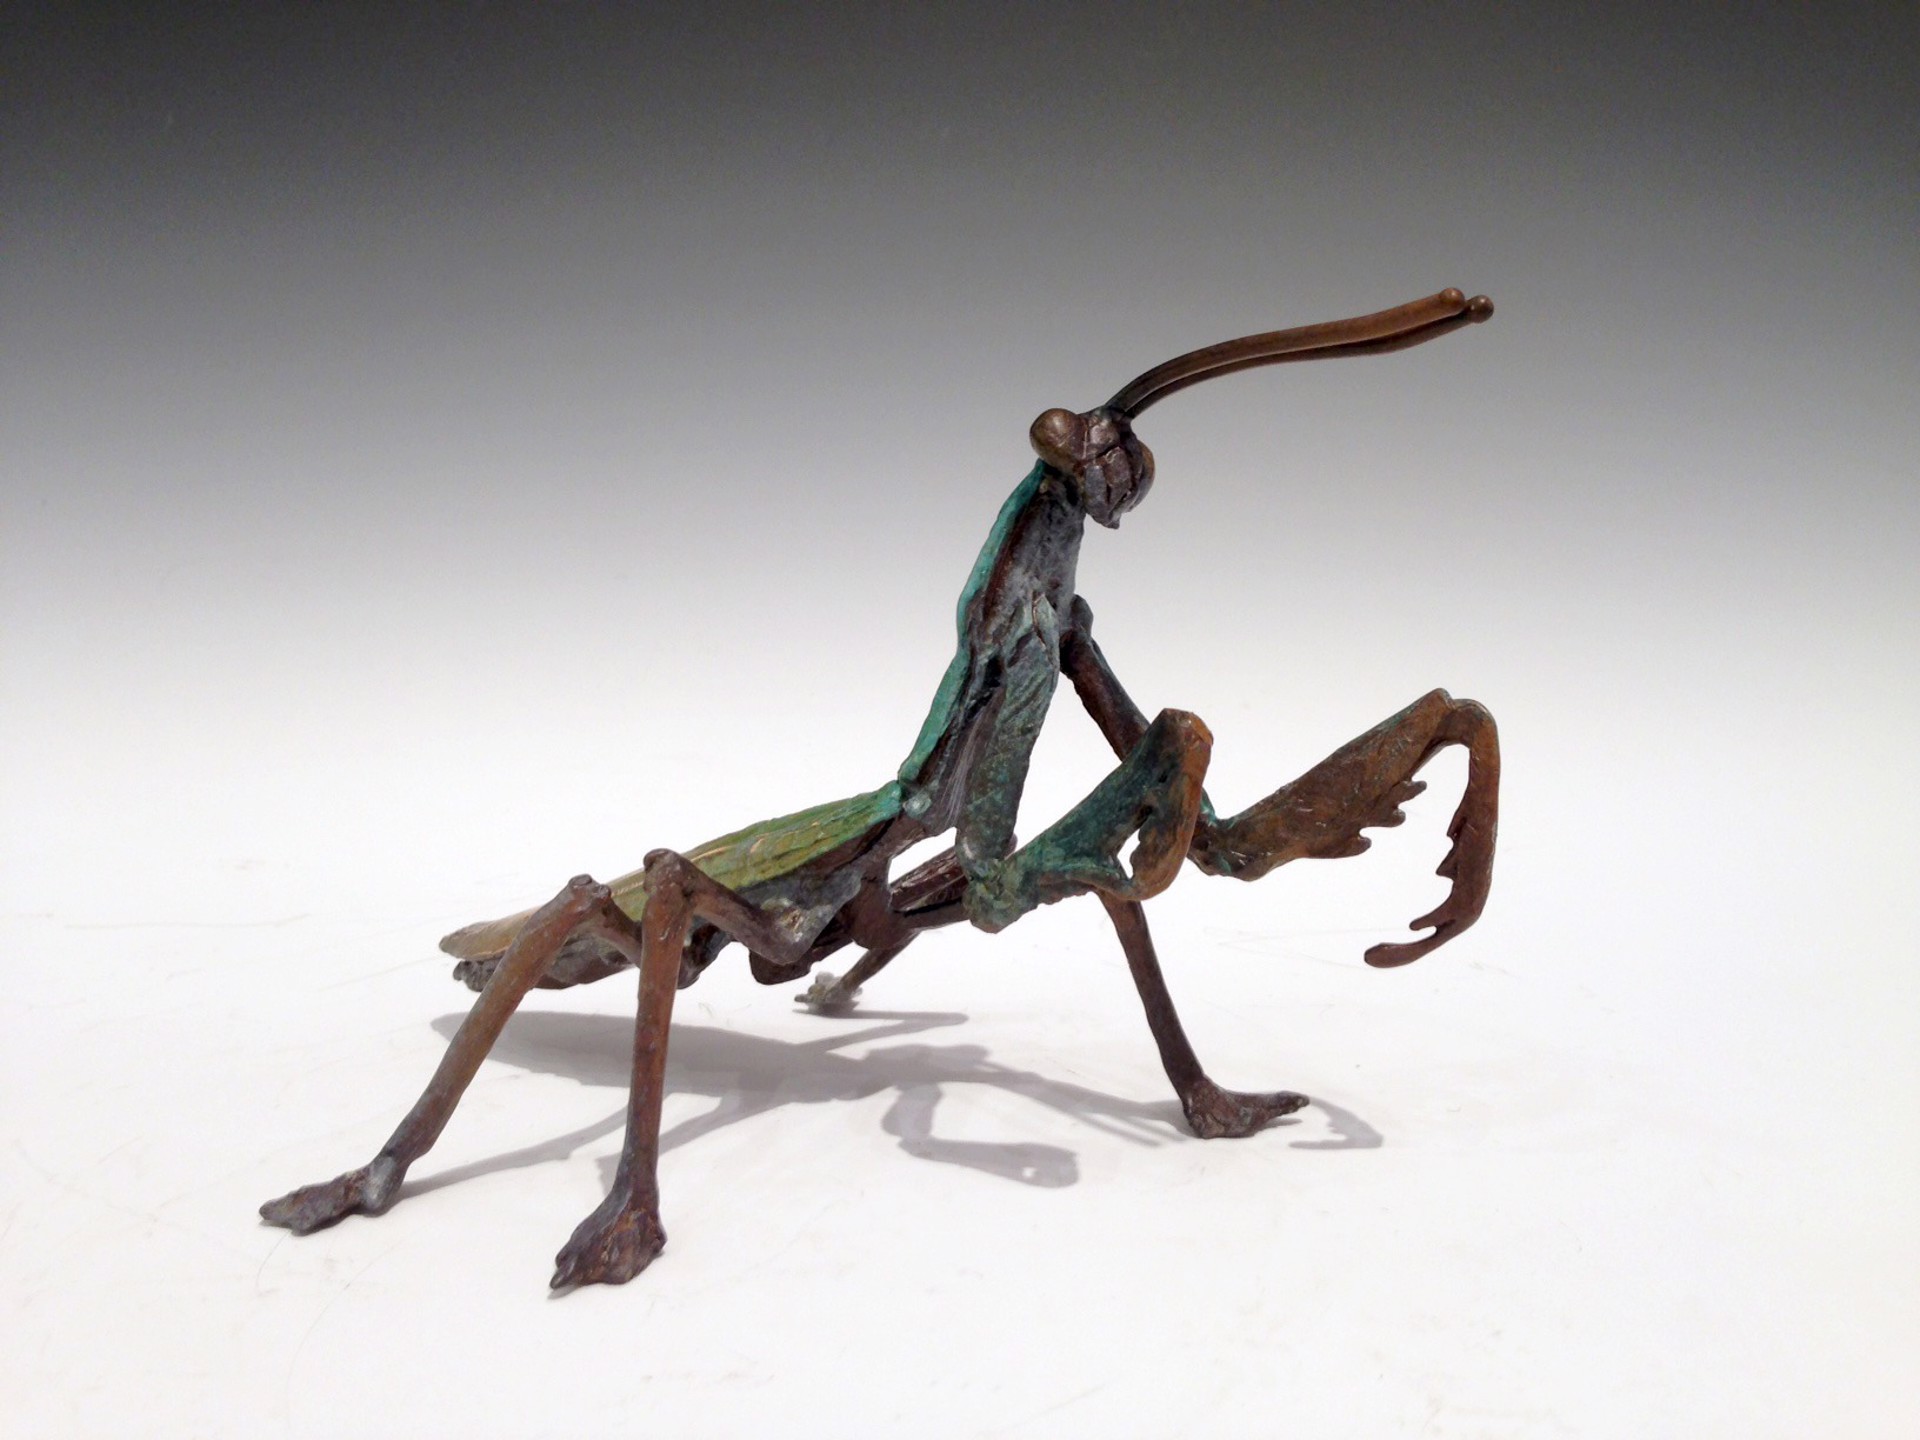 Praying Mantis by Dan Chen